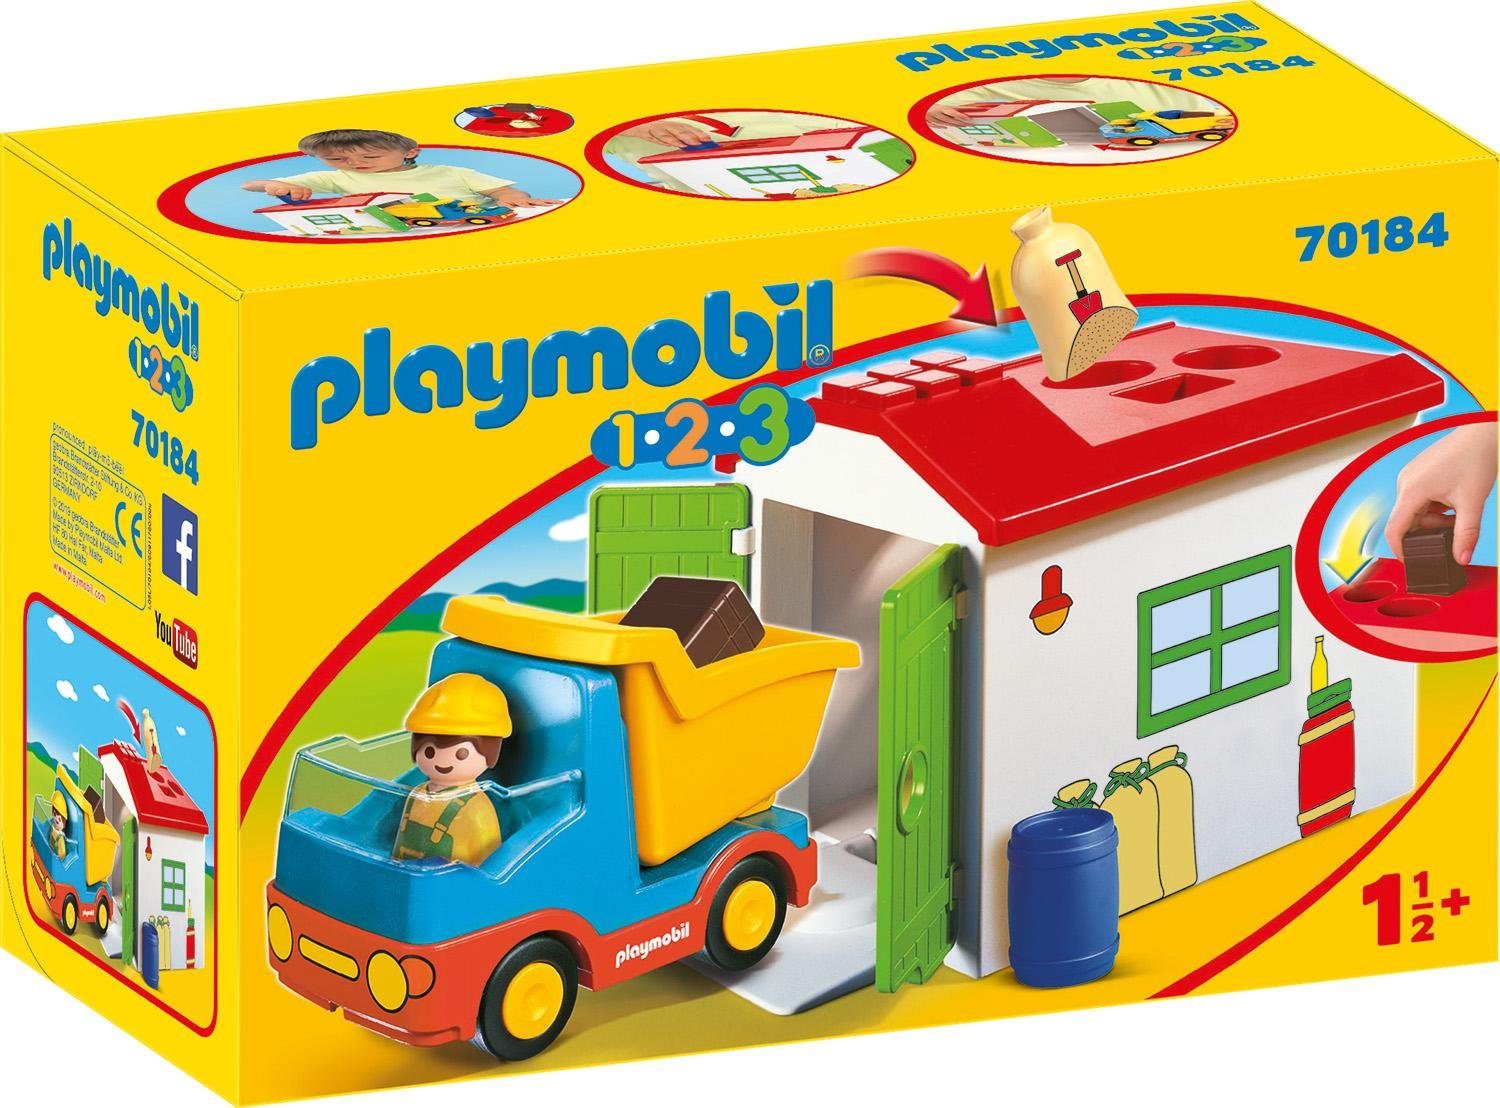 Playmobil Playmobil® in Made Europe LKW Konstruktions-Spielset (70184), Sortiergarage 1-2-3, mit